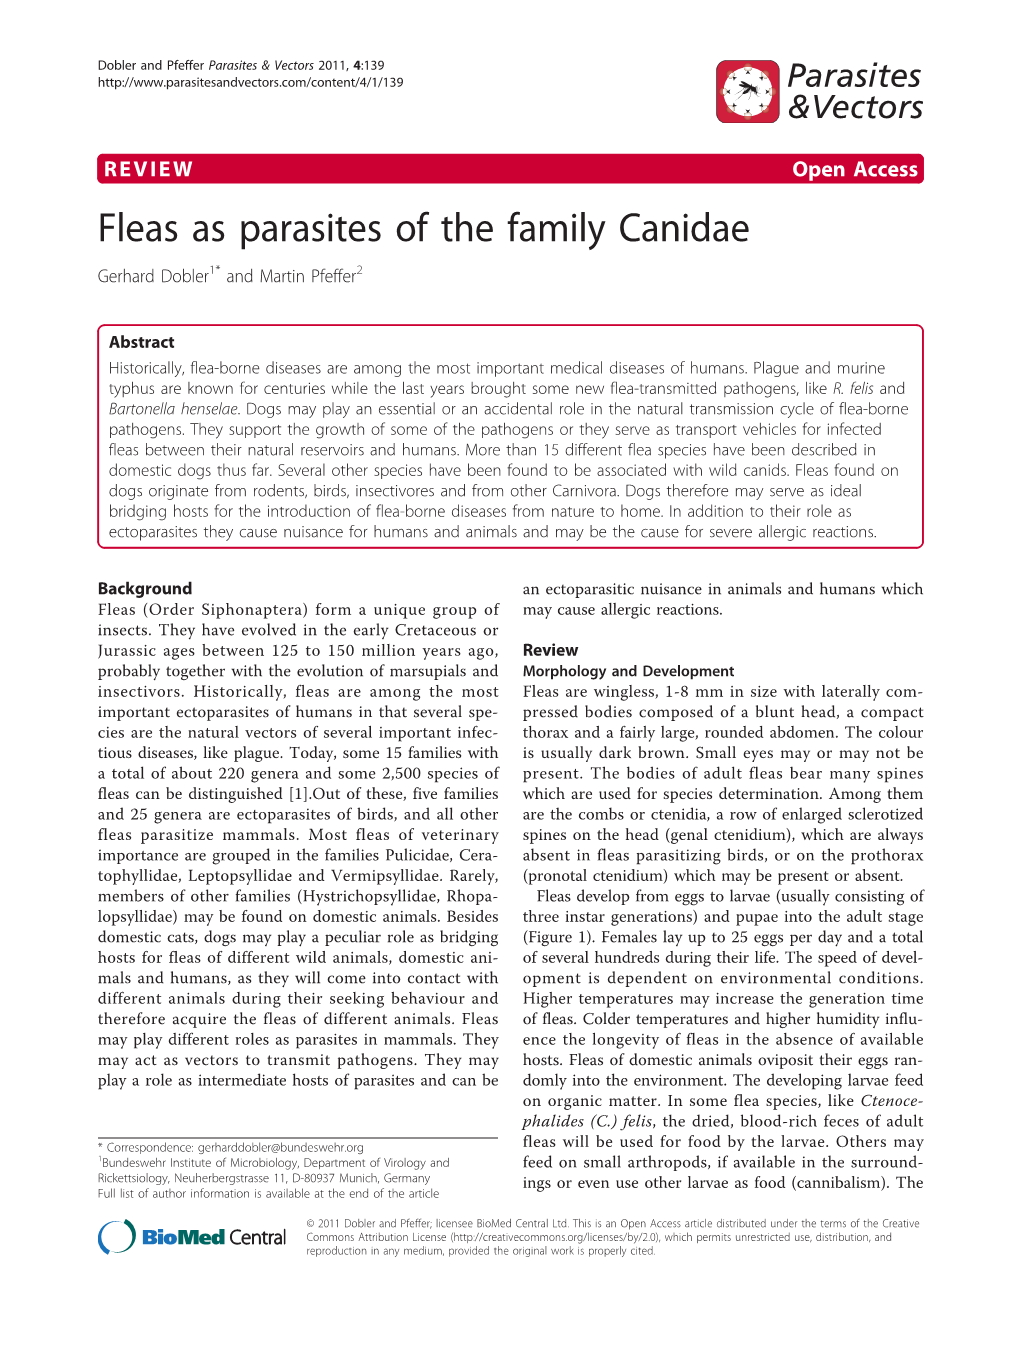 Fleas As Parasites of the Family Canidae Gerhard Dobler1* and Martin Pfeffer2